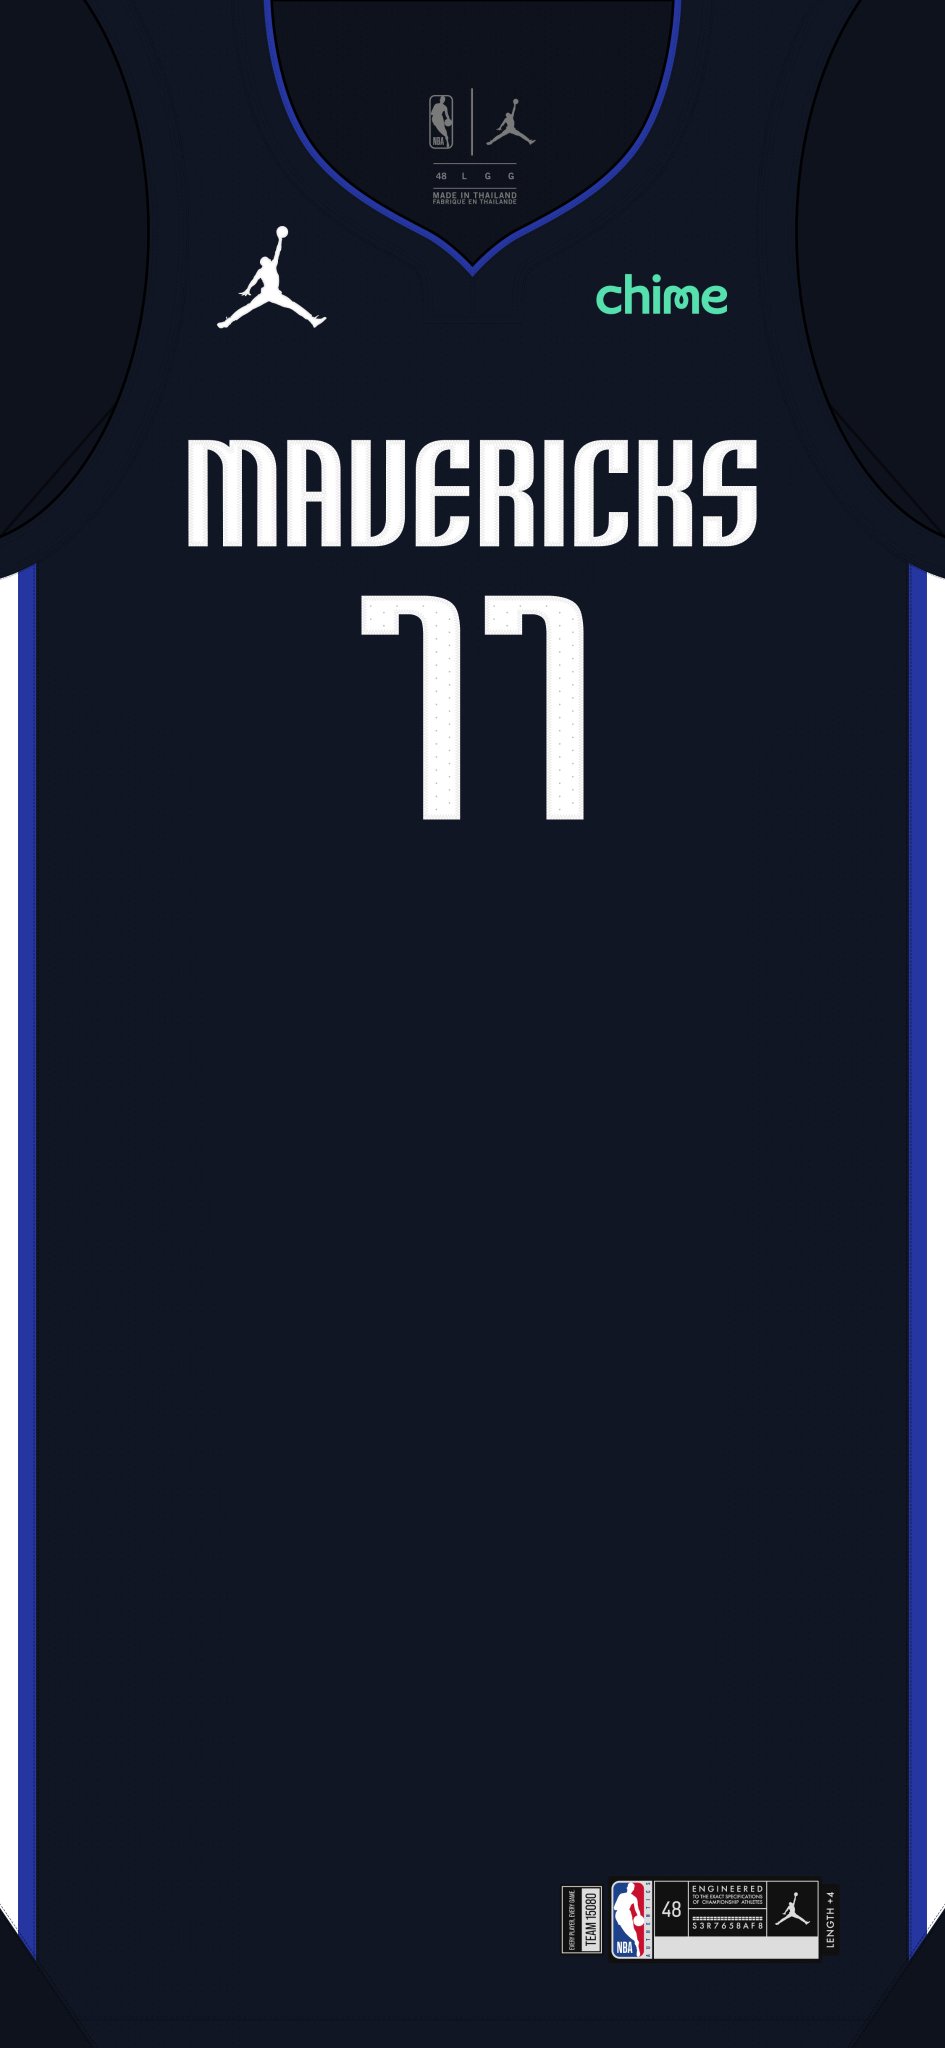 Jordan Liem on X: They really need to rebrand the whole team. They look  very outdated. Dallas Mavericks 2017-Present Association Jersey No. 6  Kristaps Porziņģis Icon Jersey No. 77 Luka Dončić #NBA #